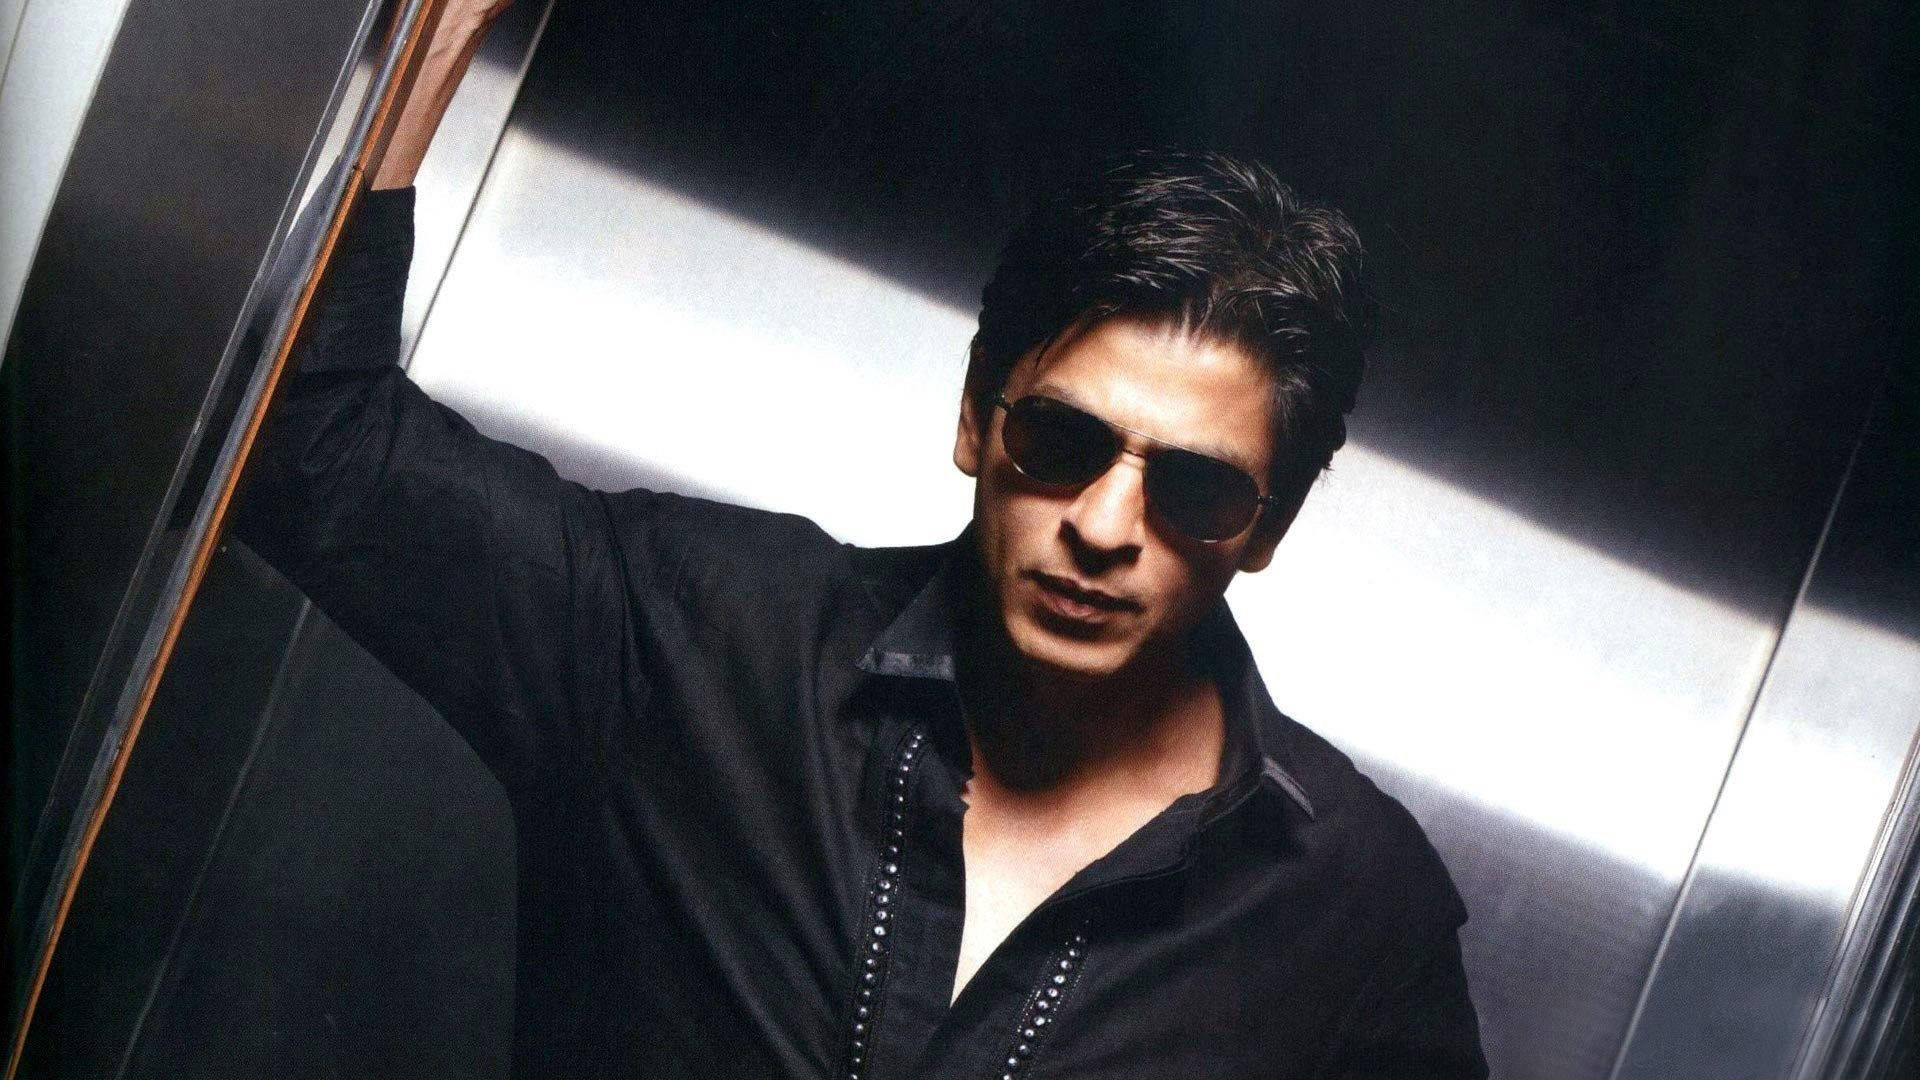 Shah Rukh Khan Elevator Photoshoot Background